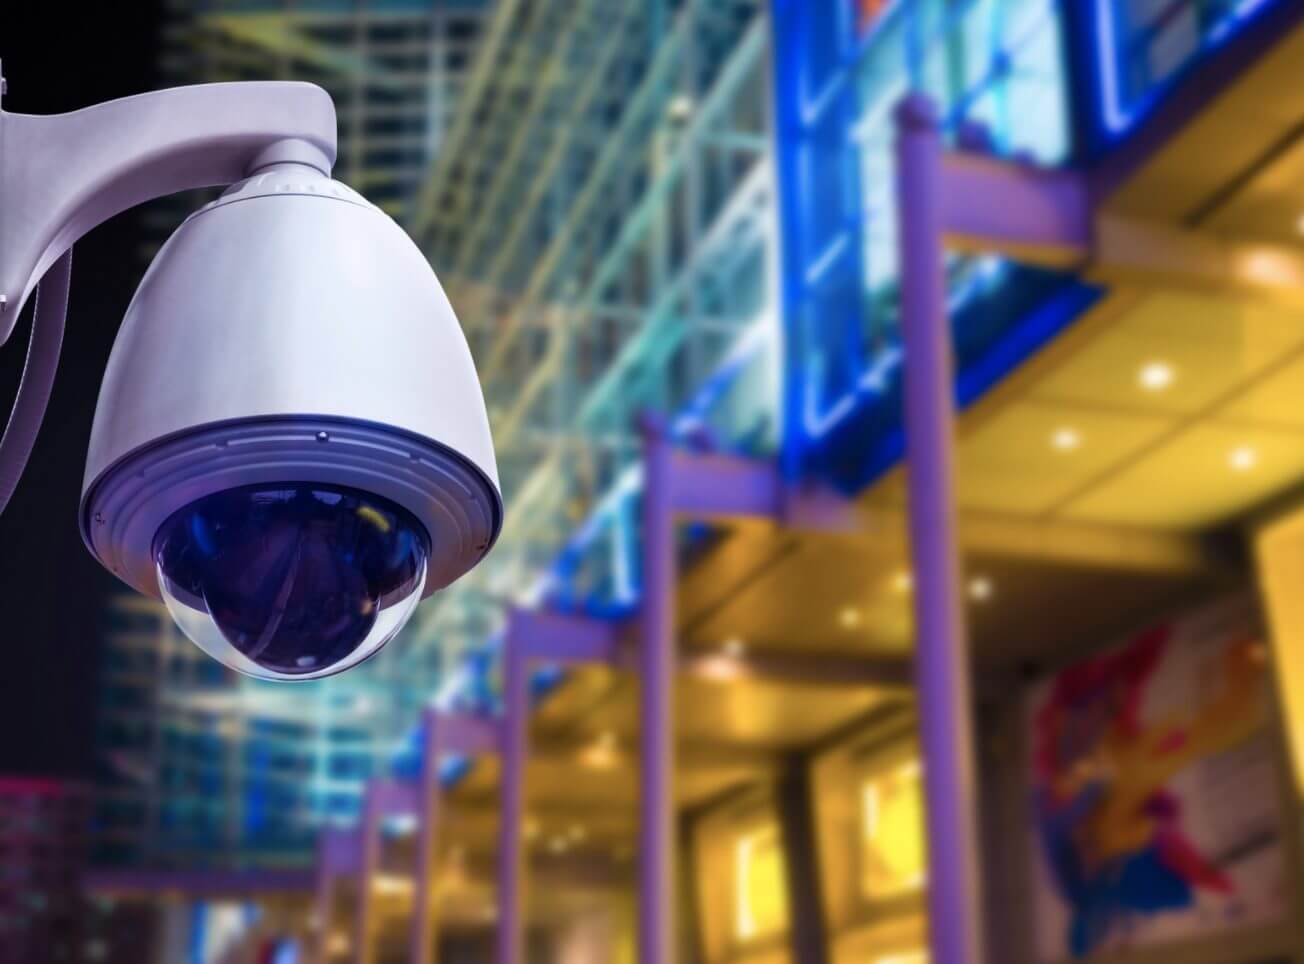 Round camera overlooks a street at night